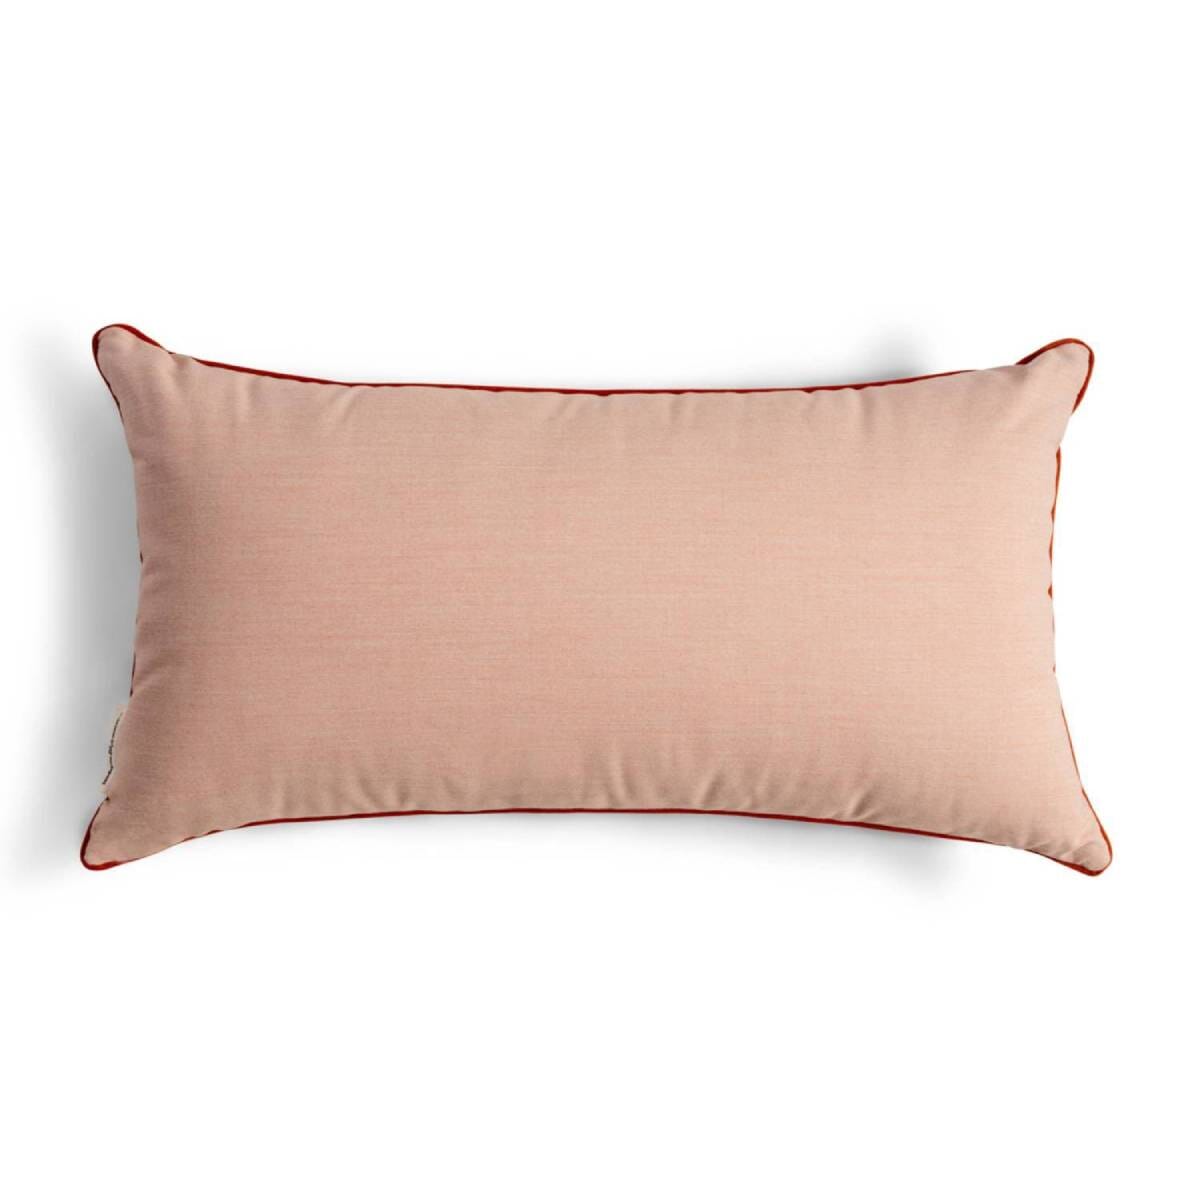 The Rectangle Throw Pillow - Rivie Pink Rectangle Throw Pillow Business & Pleasure Co Aus 